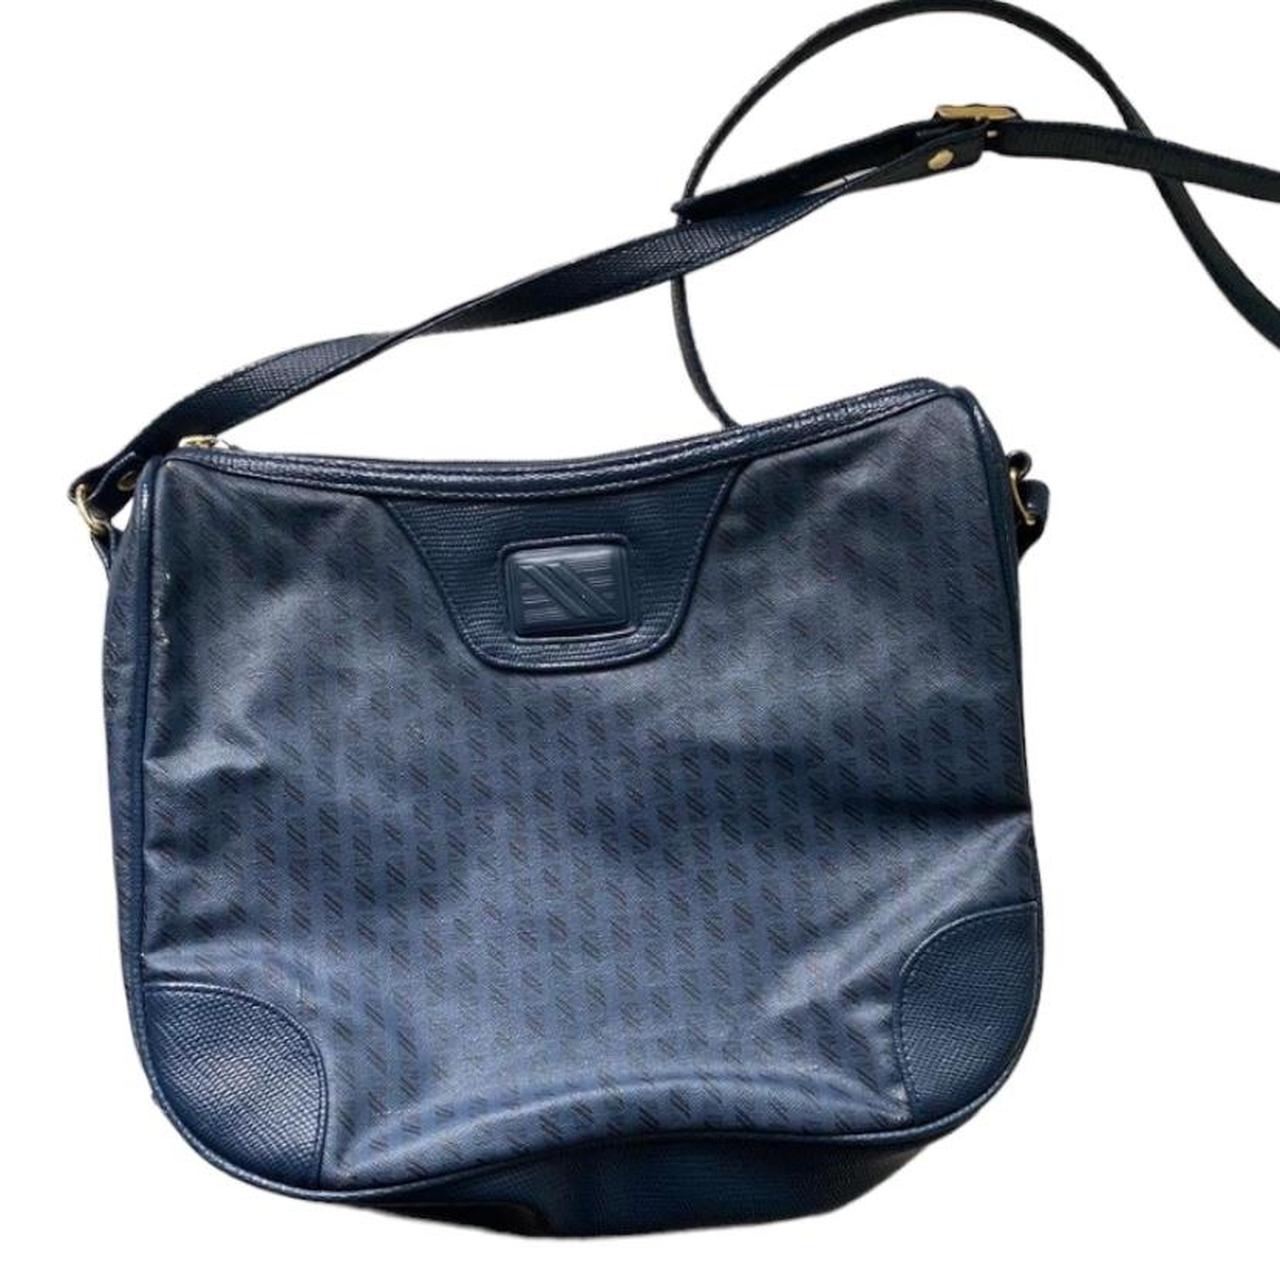 Jaclyn Smith | Bags | Jaclyn Smith Brown Croc Faux Leather Handbag Purse |  Poshmark